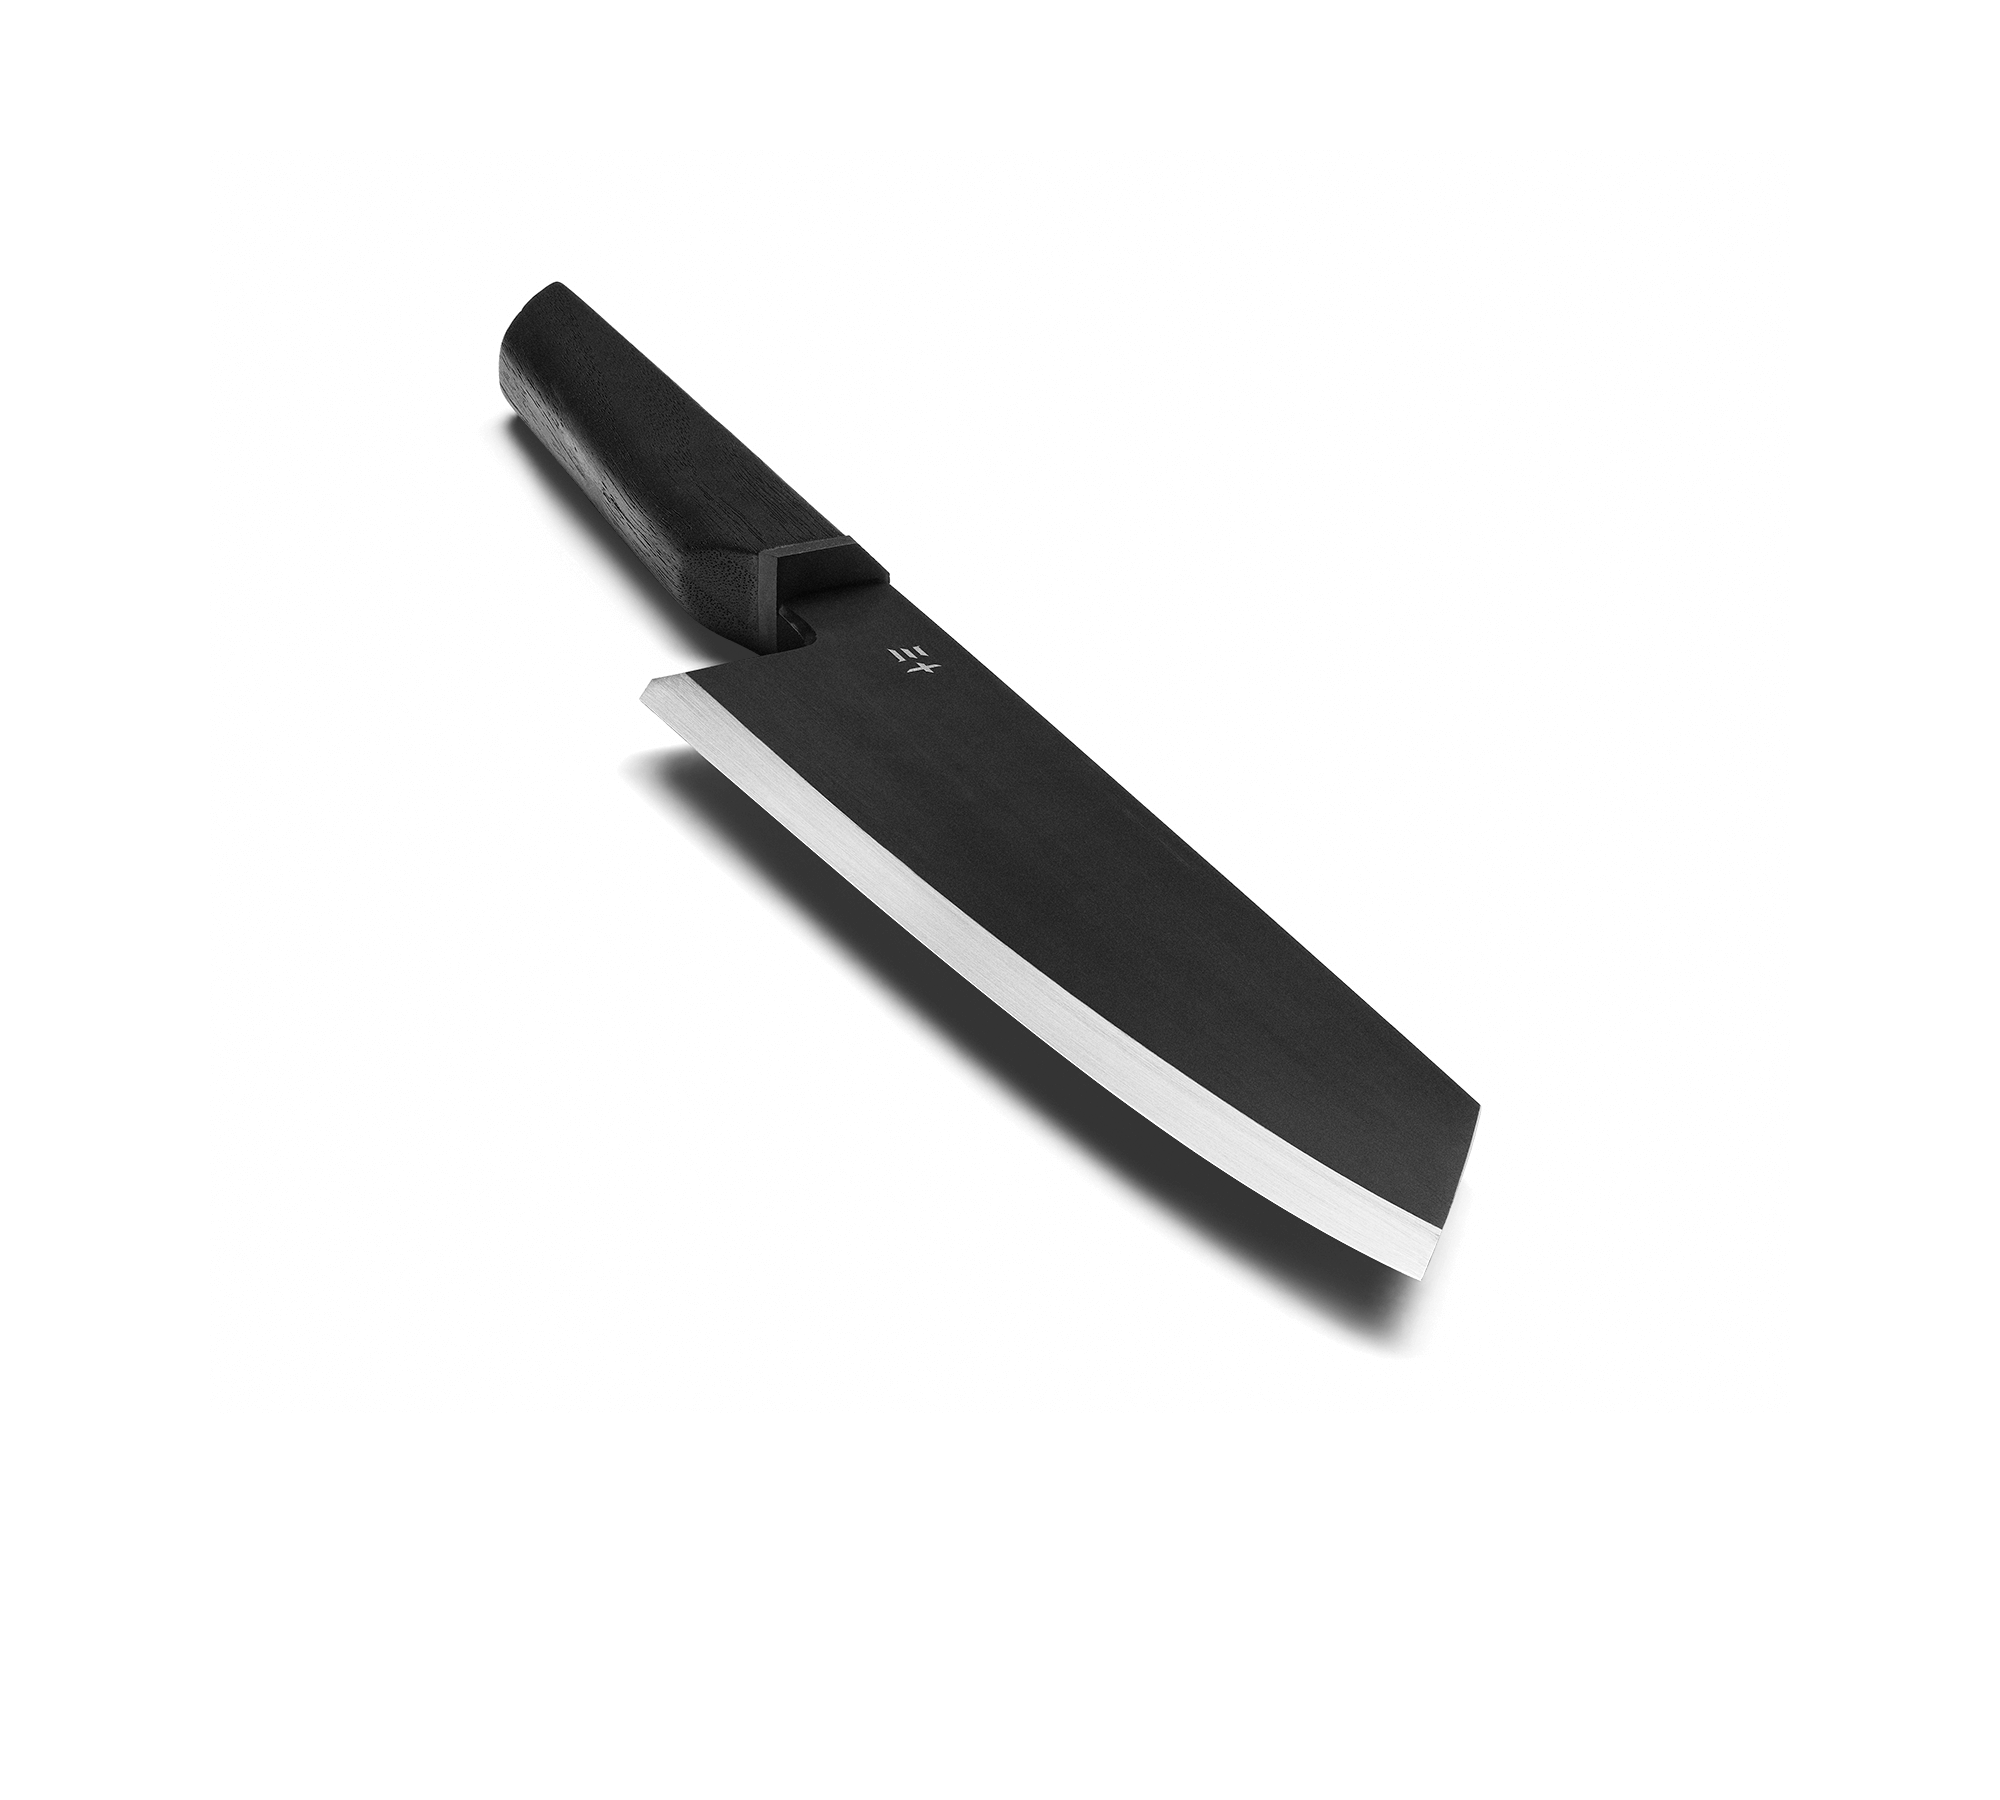 knife clipart sharp object